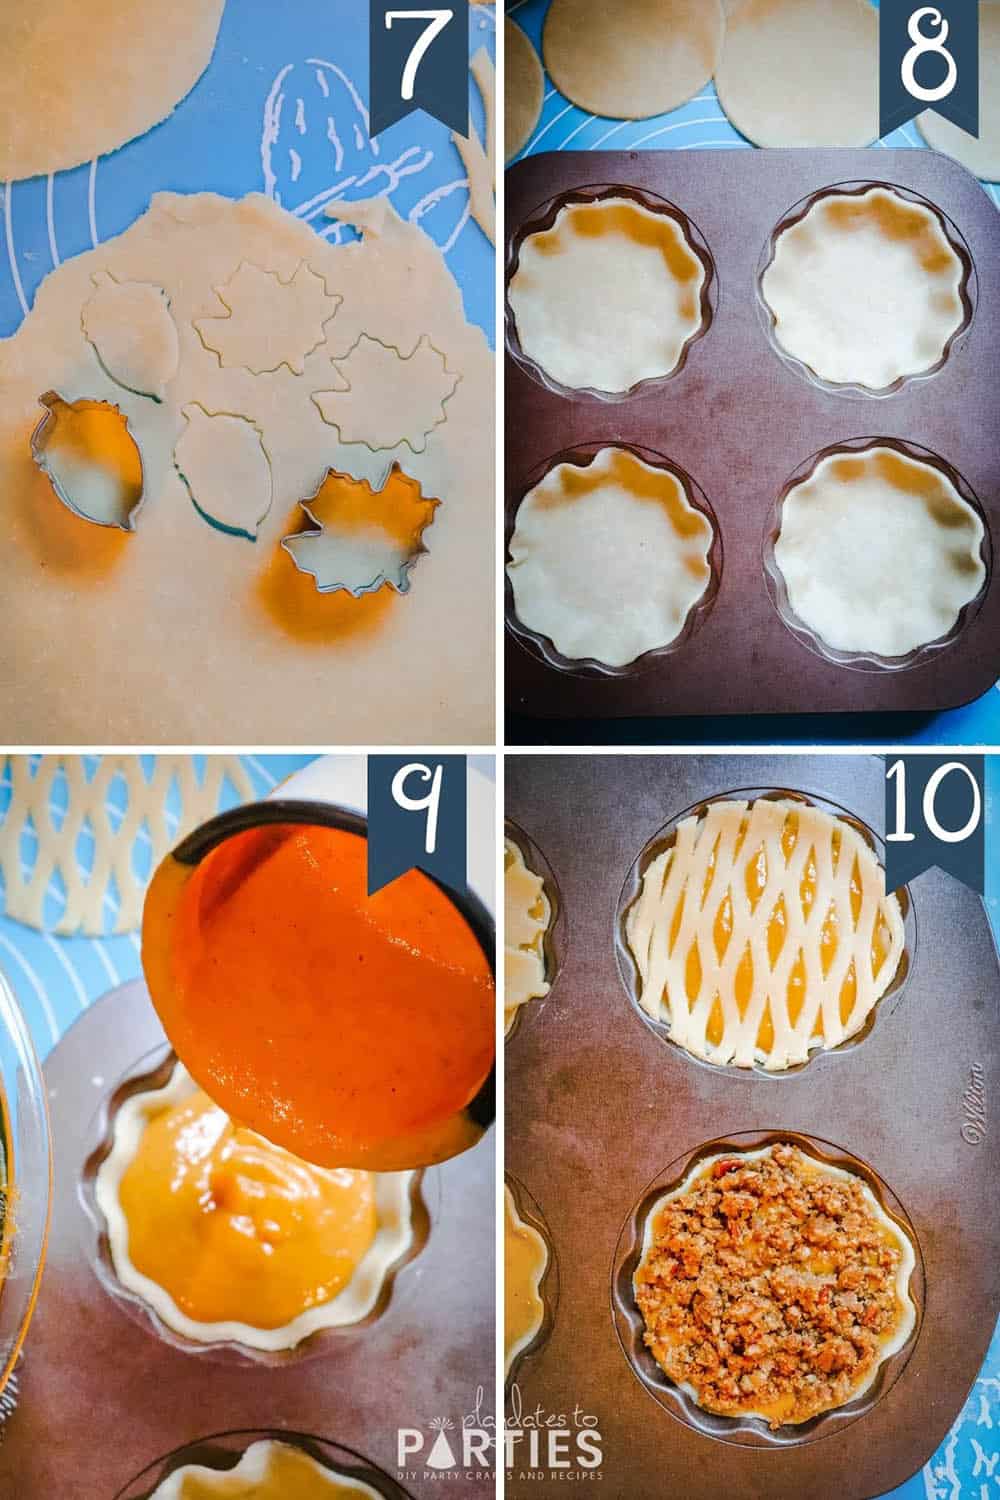 How to make mini pumpkin pies steps 7 through 10.